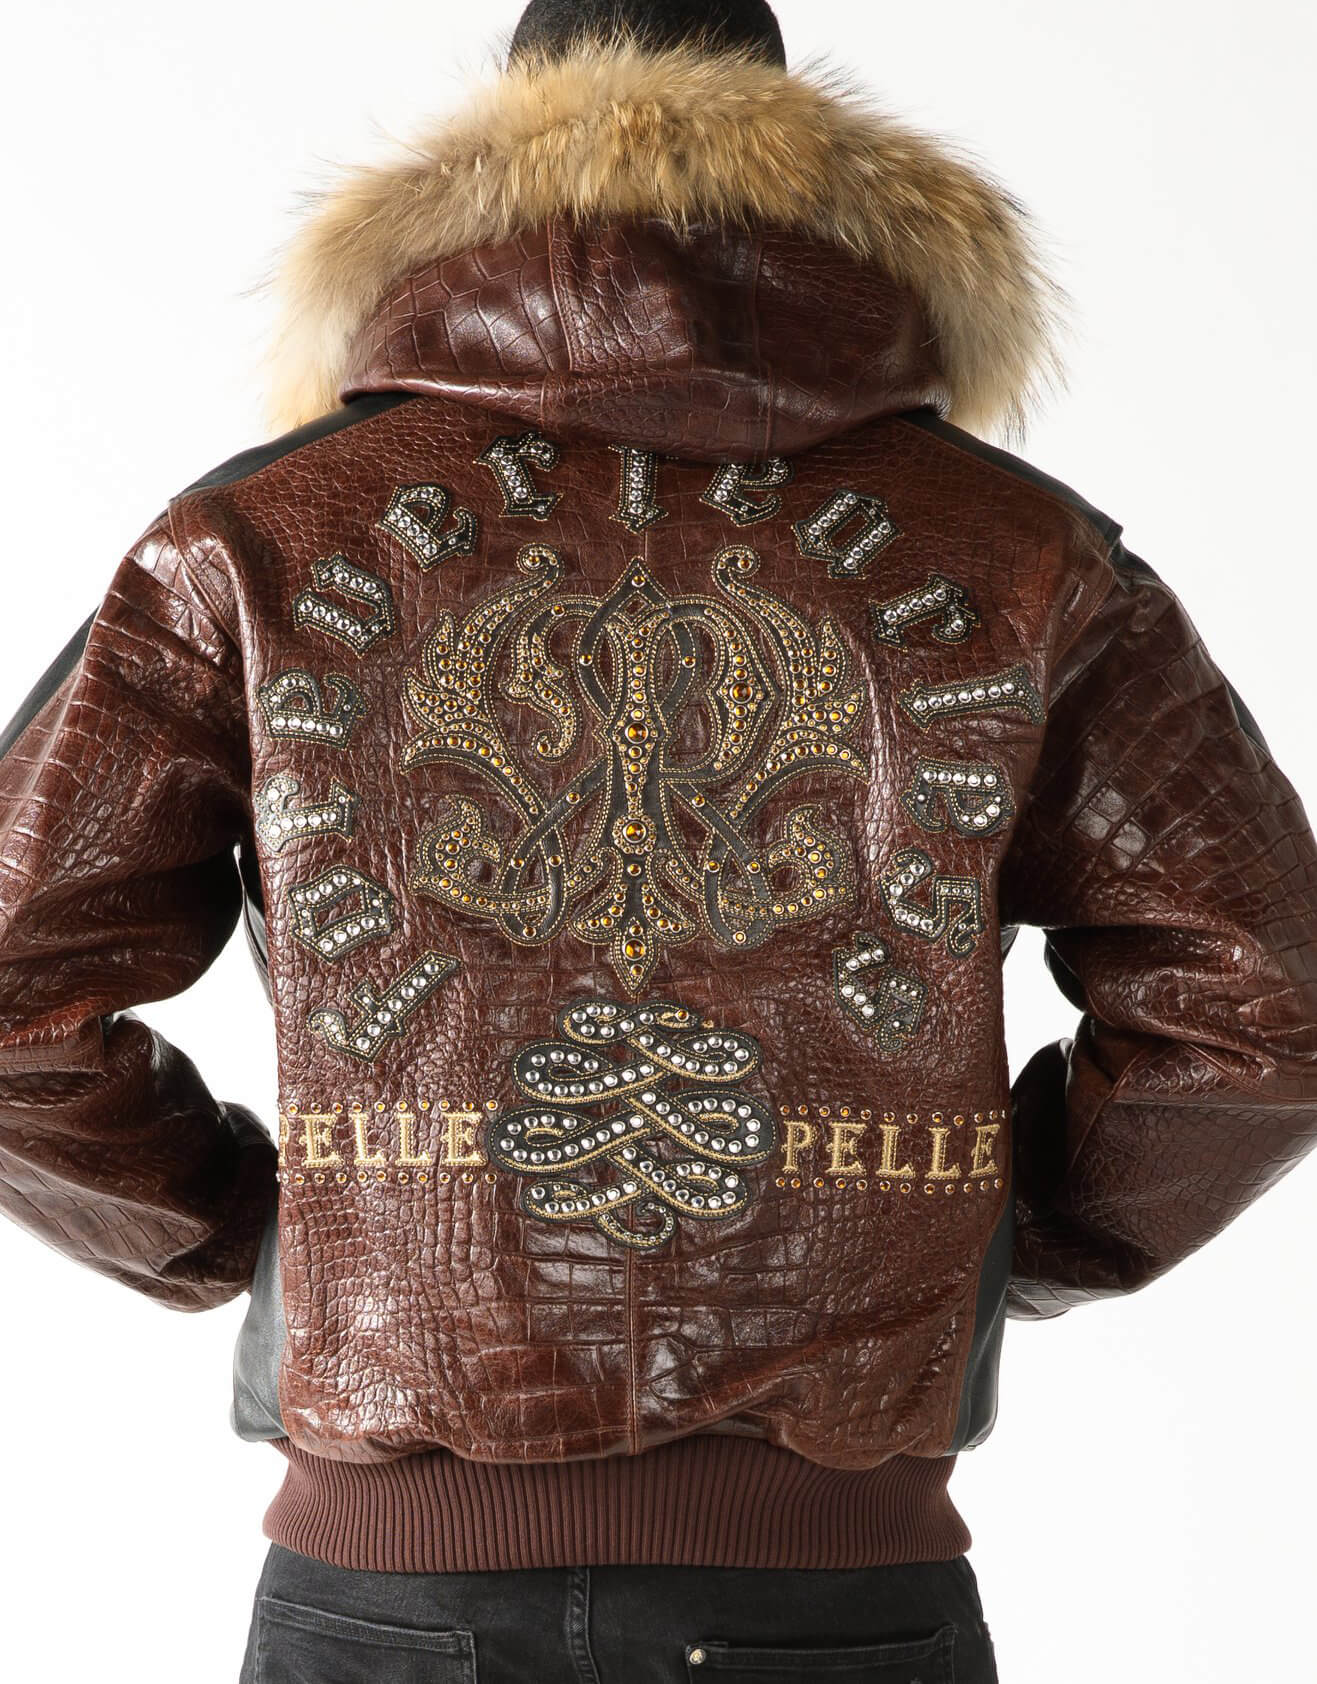 Pelle Pelle Brown Forever Fearless Leather Jacket - Maker of Jacket